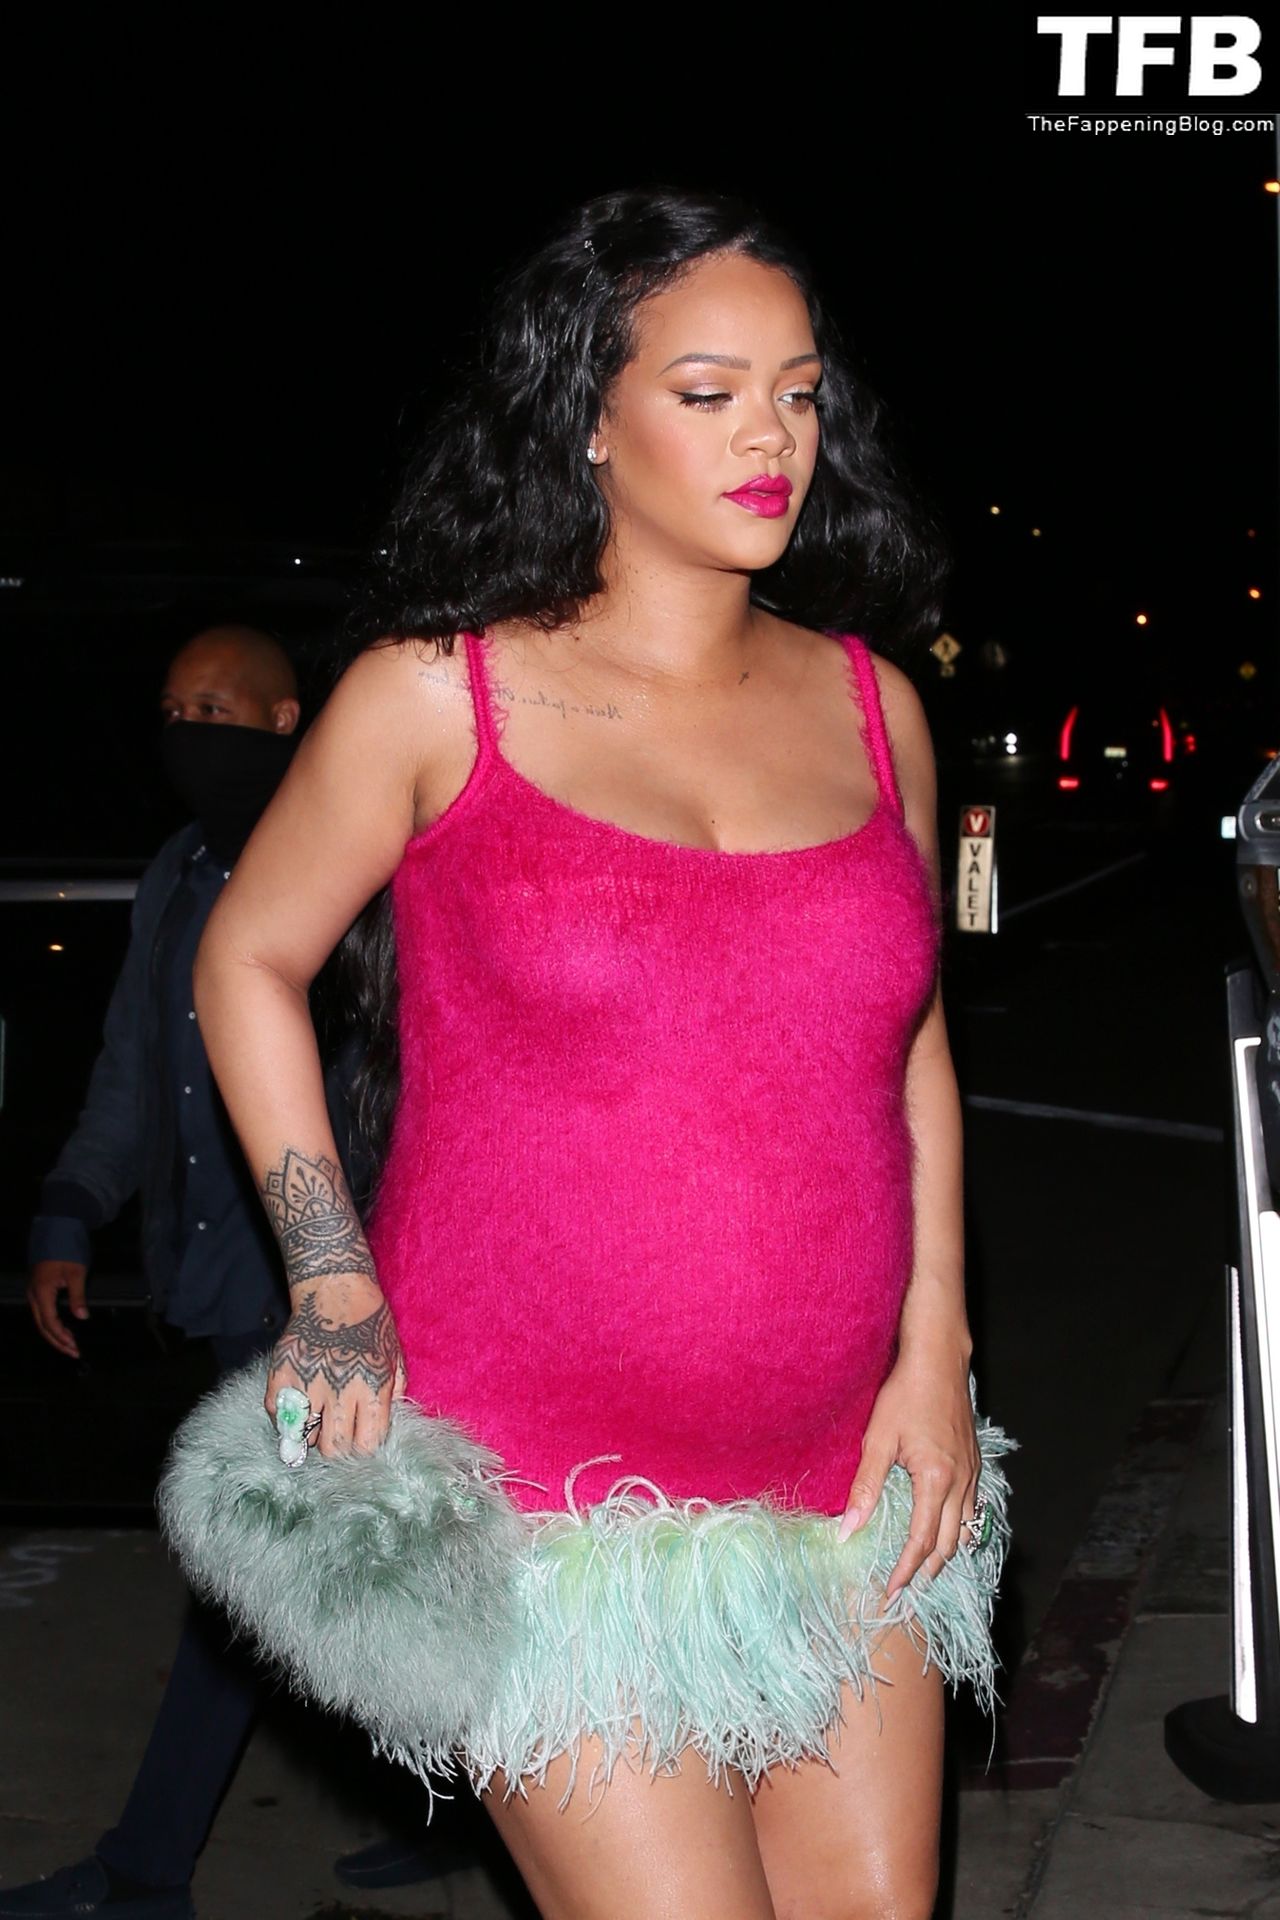 Rihanna-Sexy-The-Fappening-Blog-31.jpg